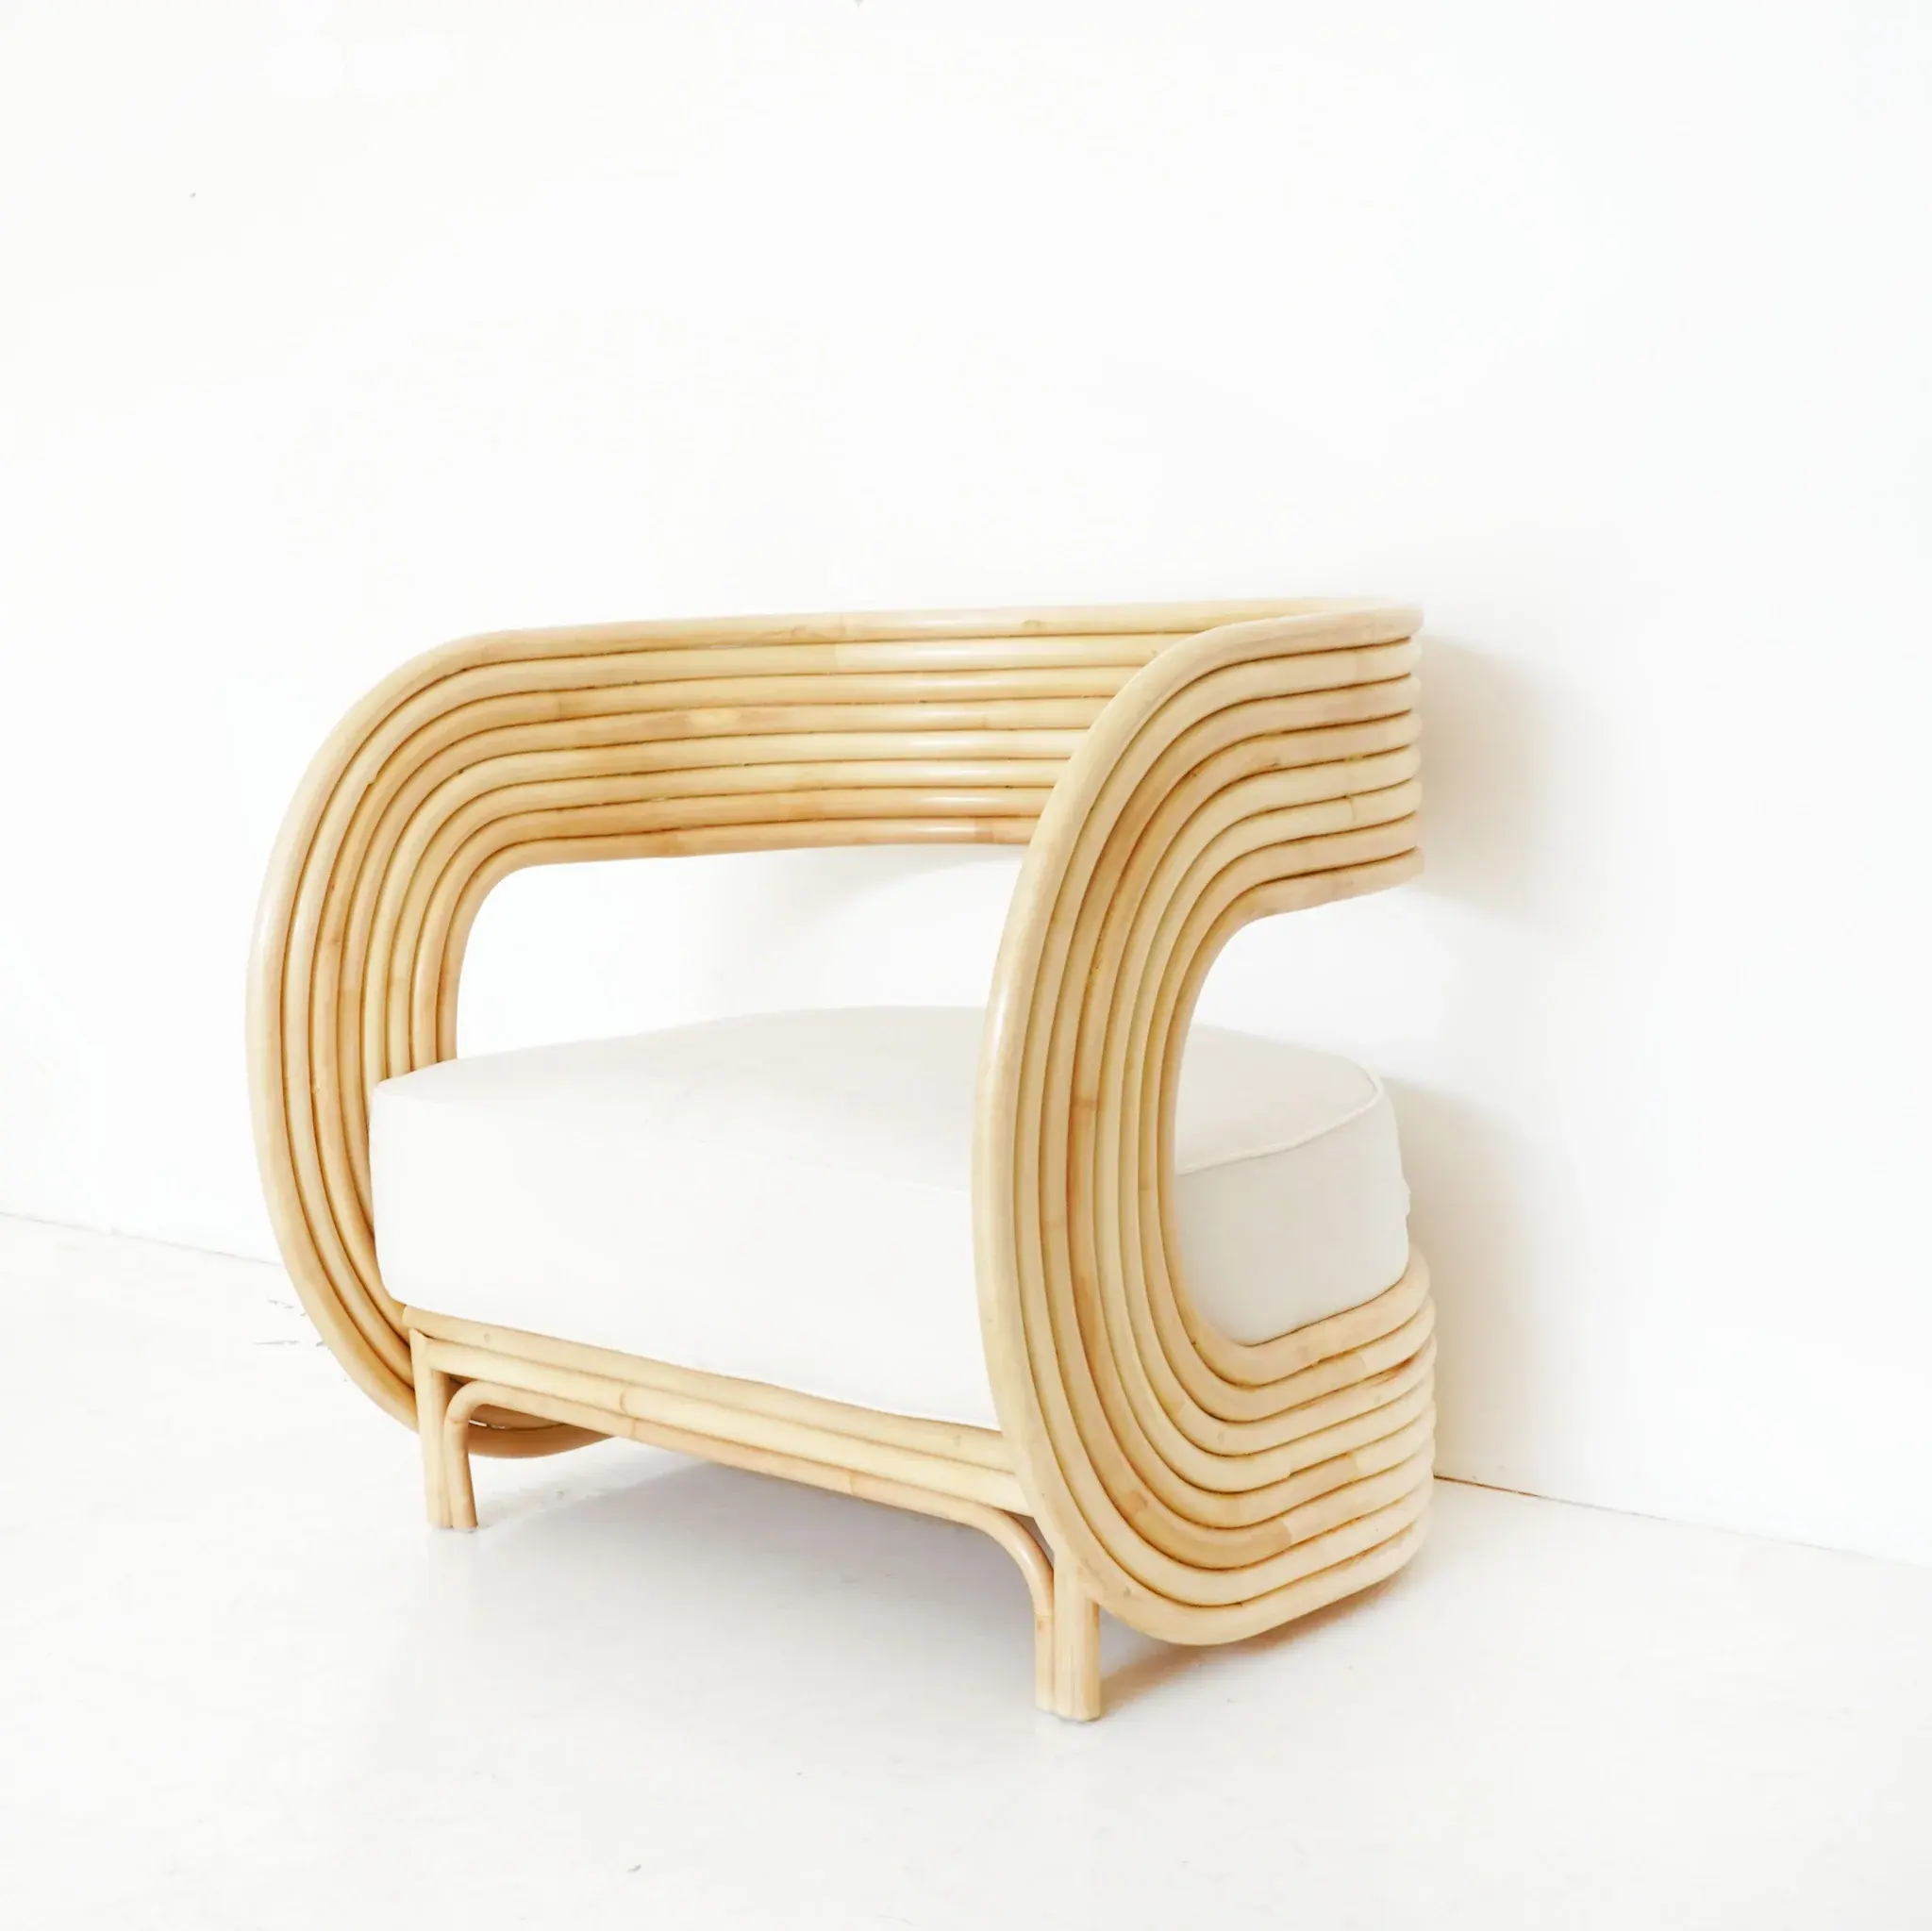 New design!!! handmade vintage rattan sofa chair - nice rattan lounge chair - modern wicker furniture rattan chair